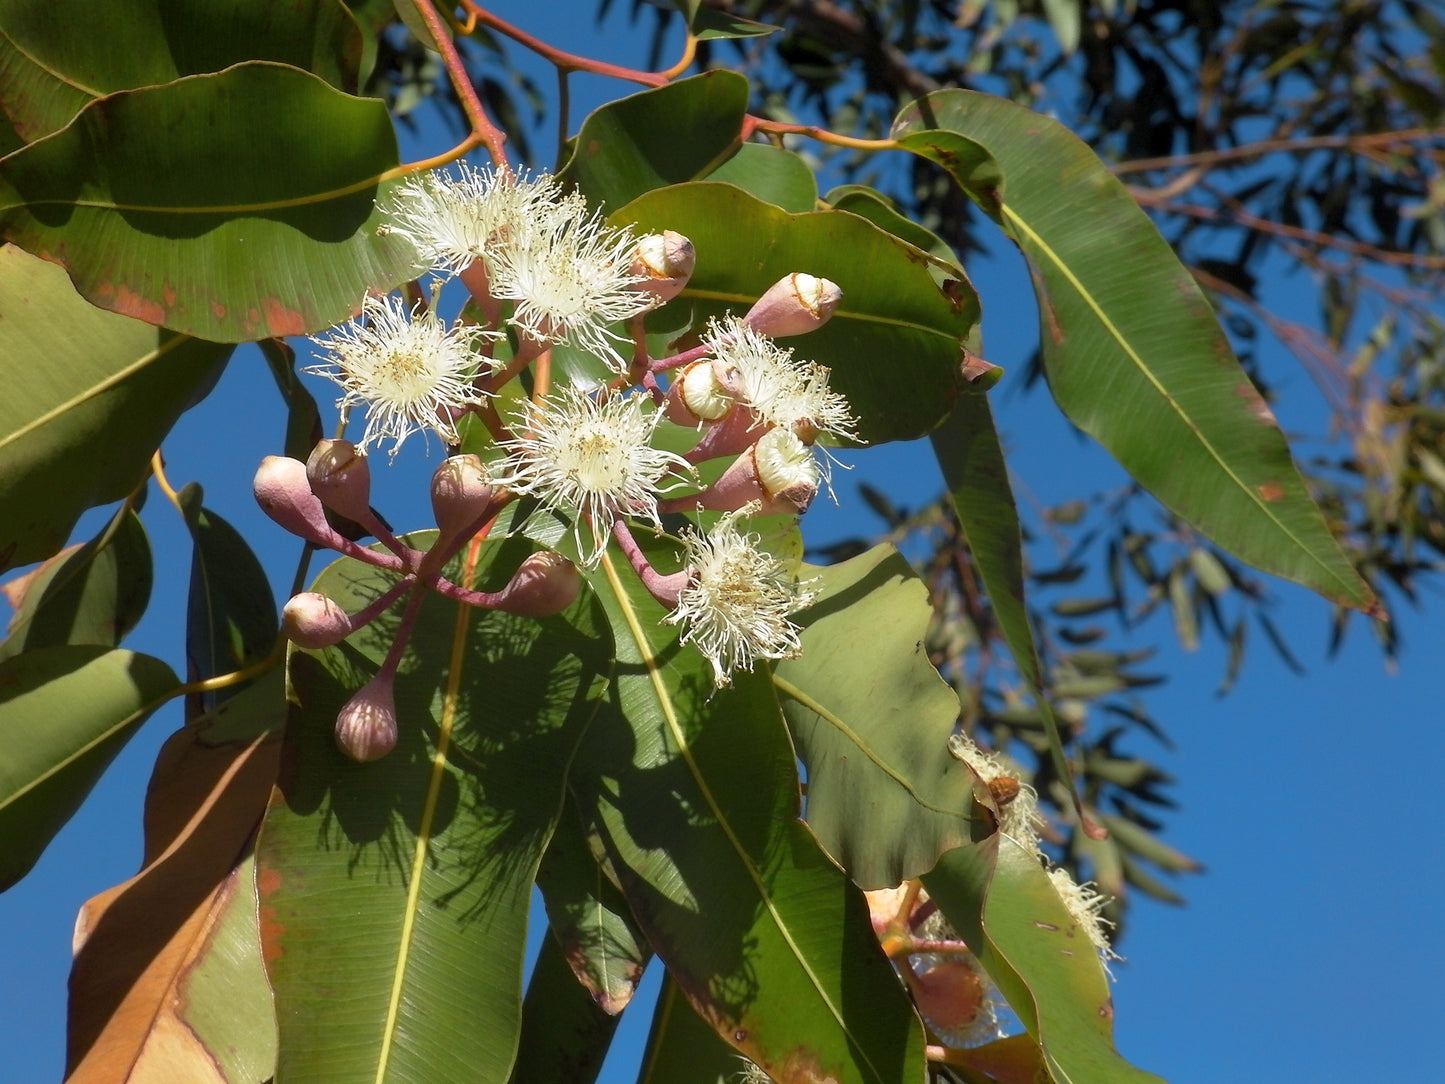 Bio Eukalyptusöl (Eucalyptus Radiata)